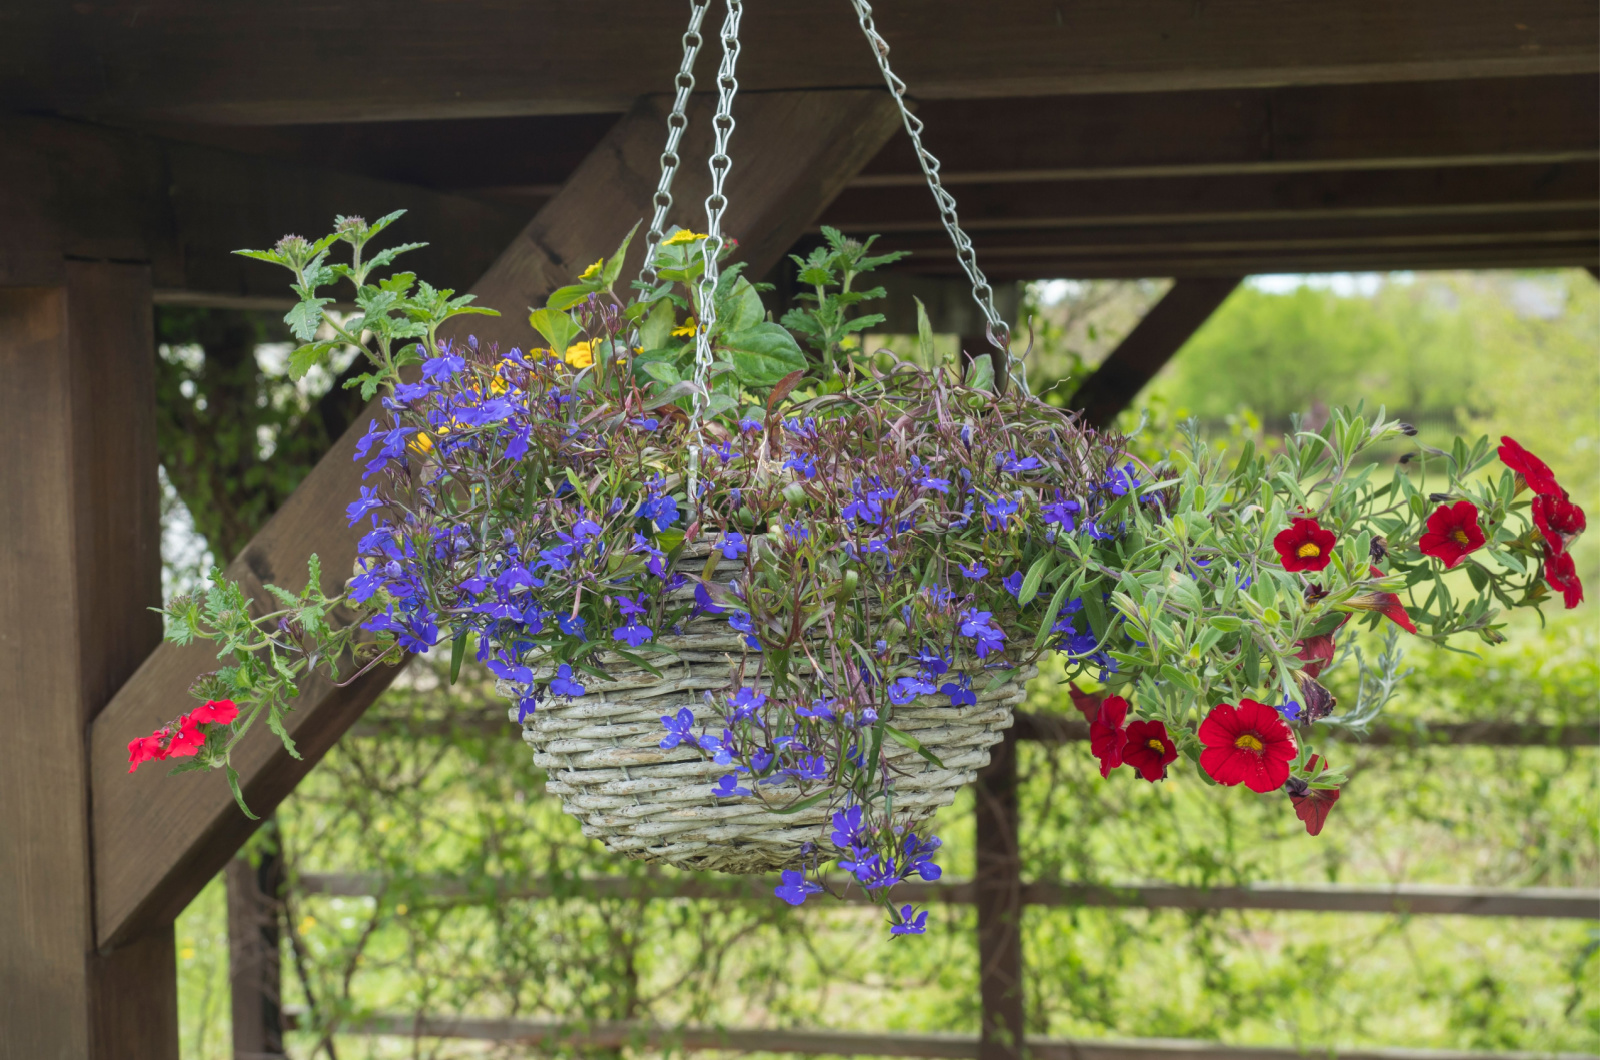 Lobelia and geranium flowers hanging from wooden pot